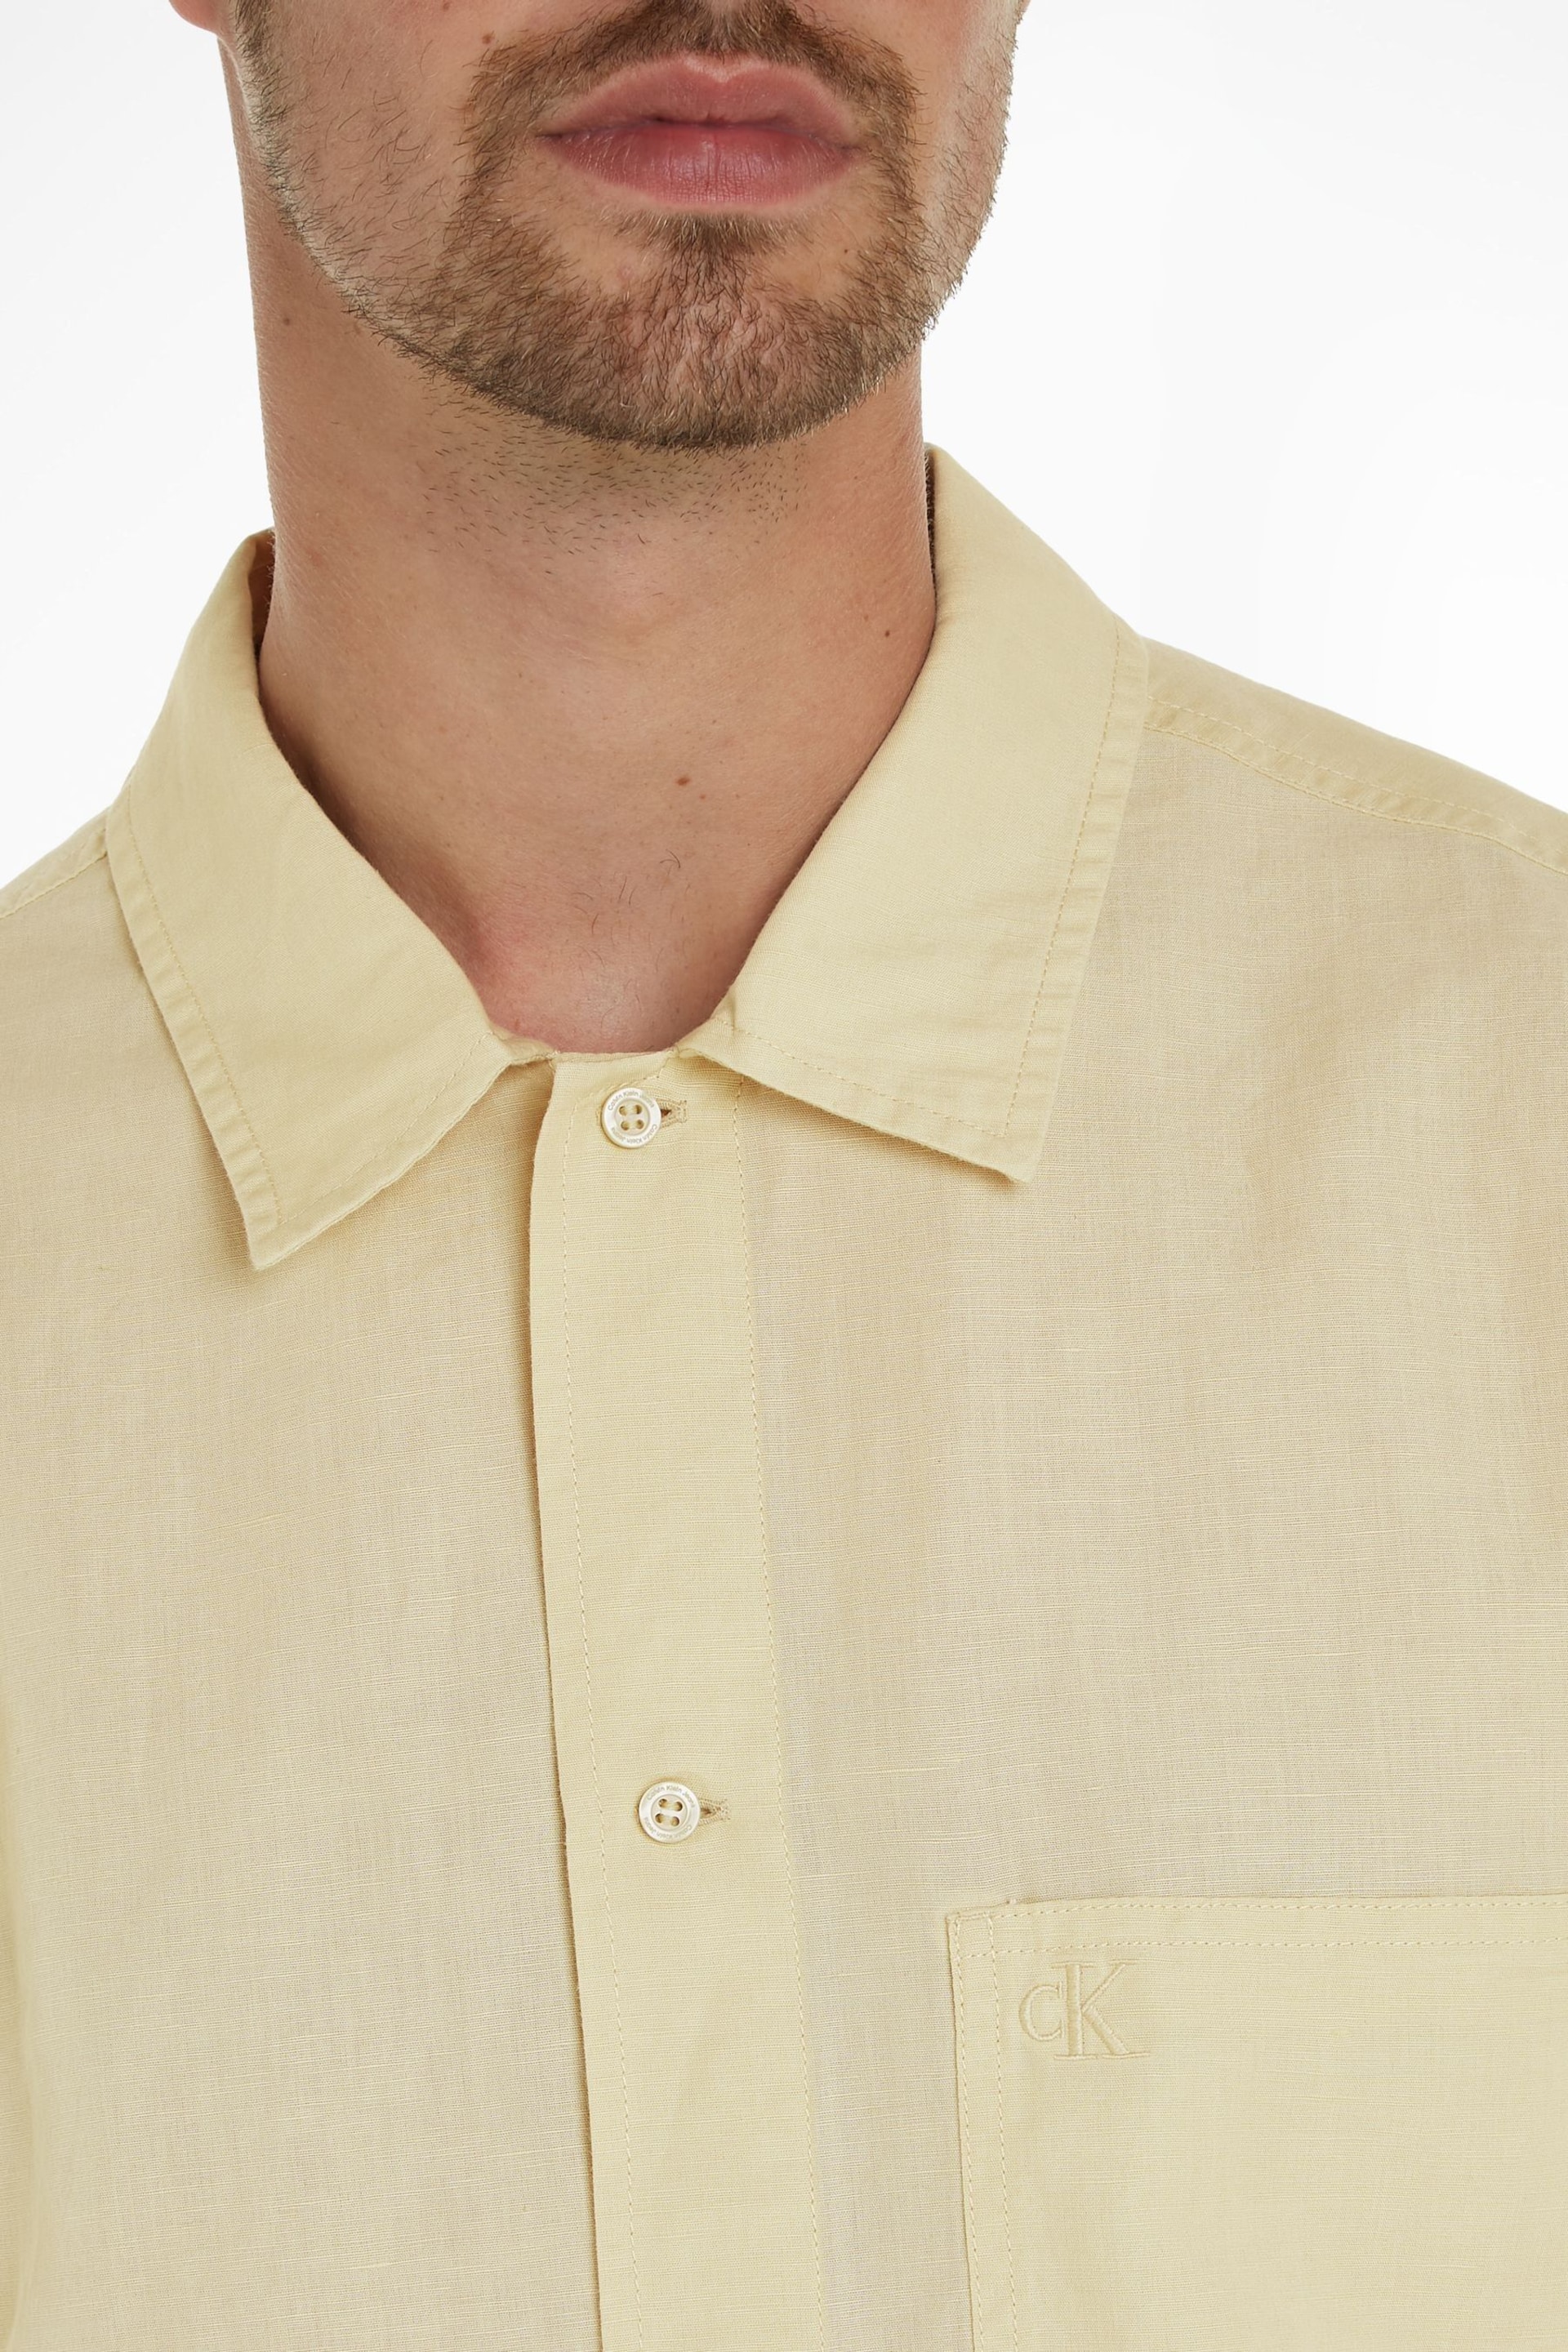 Calvin Klein Green Linen Button Down Shirt - Image 3 of 5